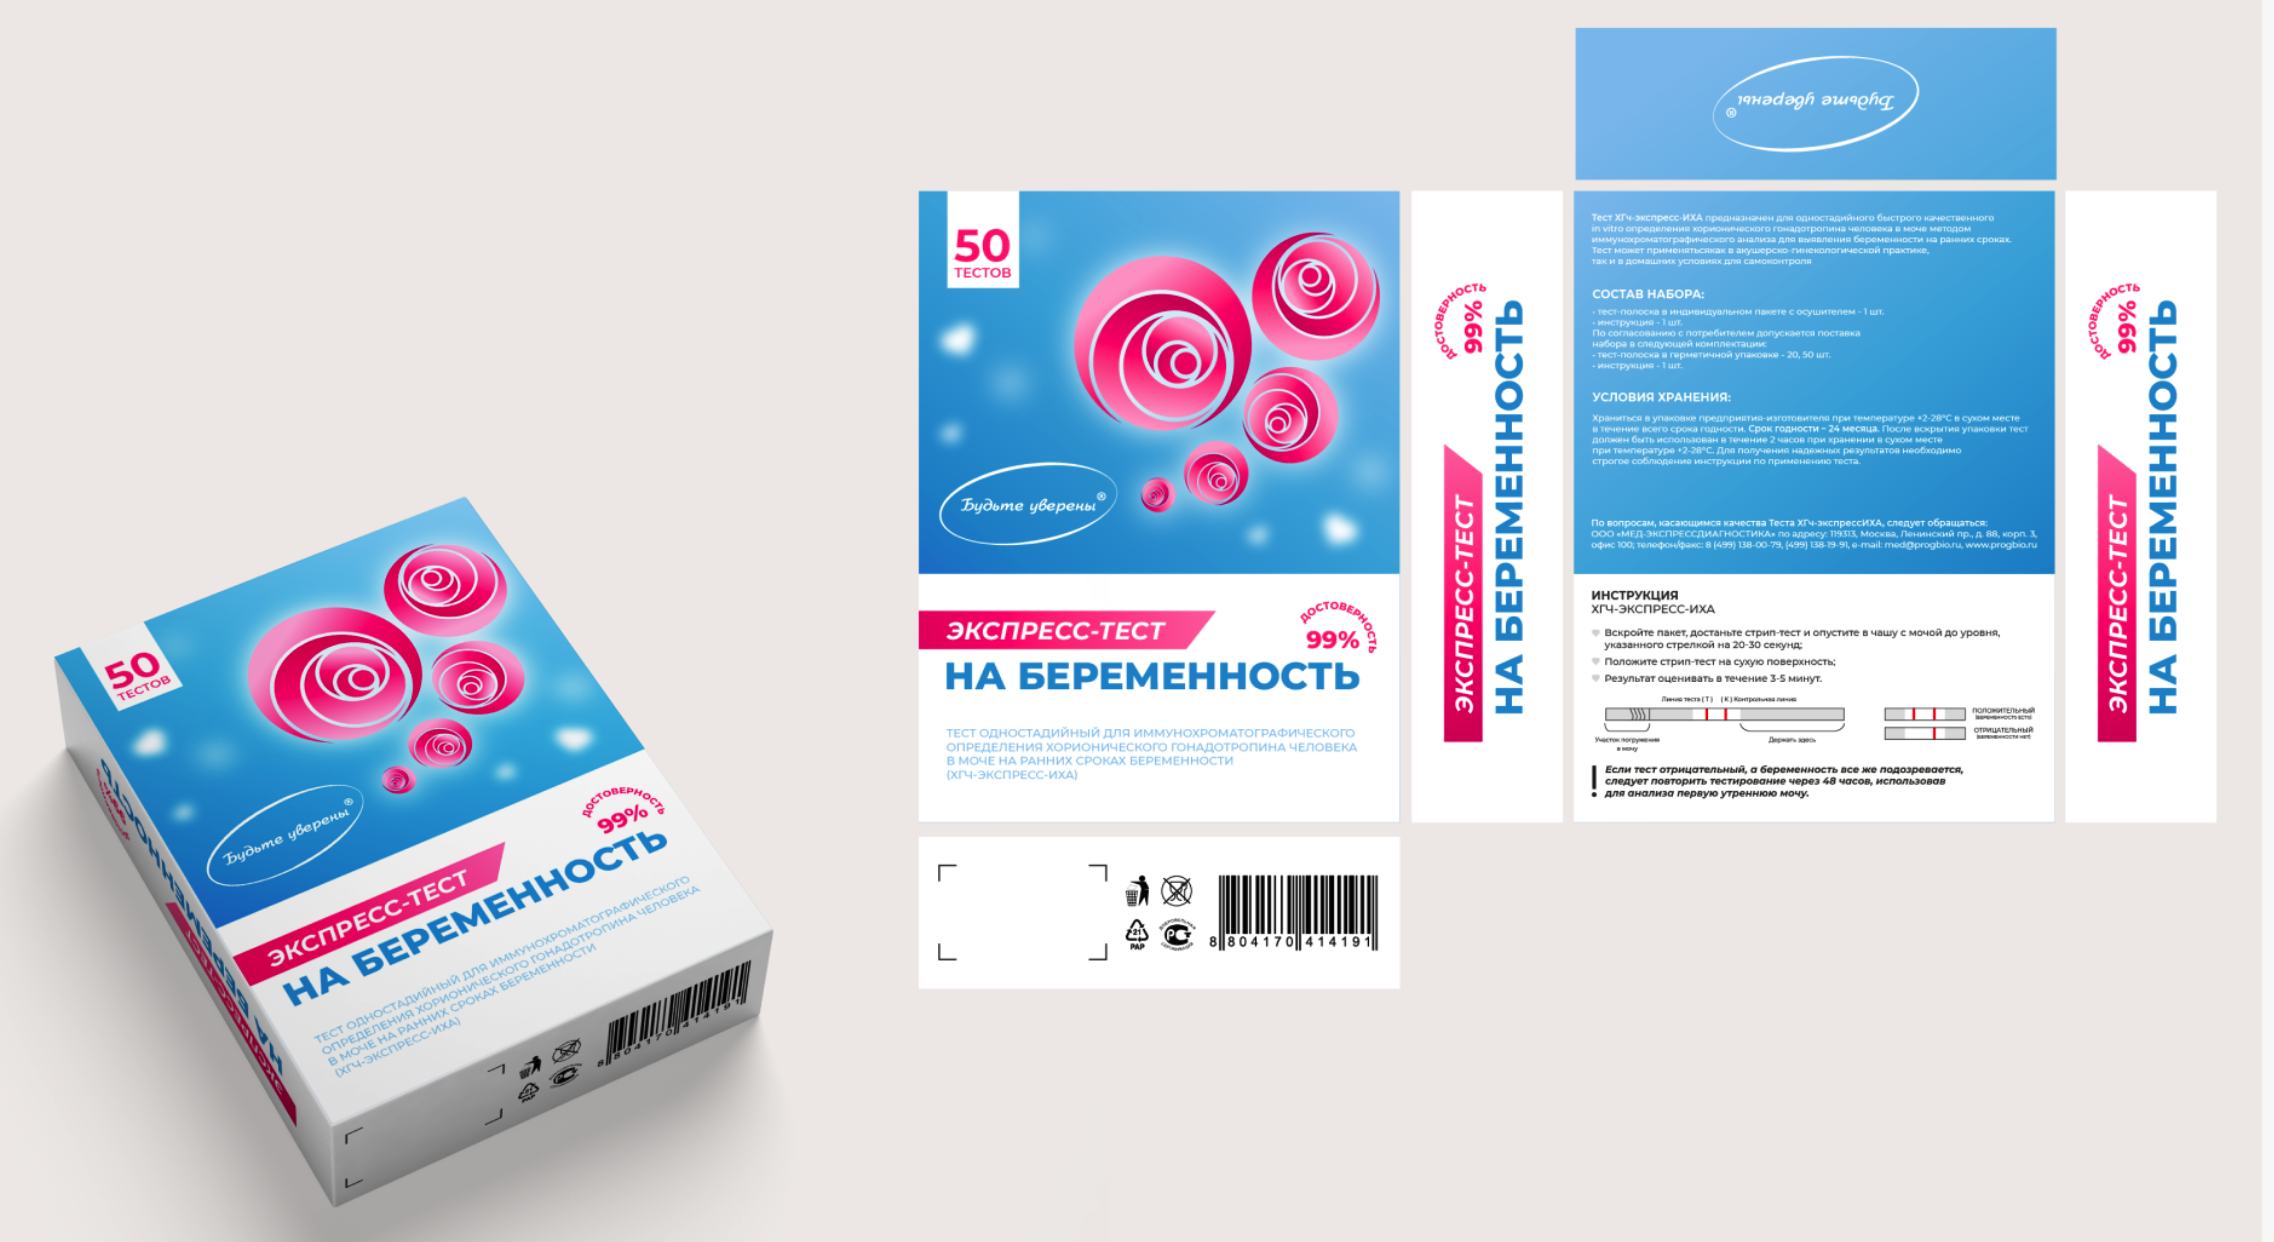 MedExpress妊娠怀孕检测试剂内外包装设计“蓝色+玫瑰”